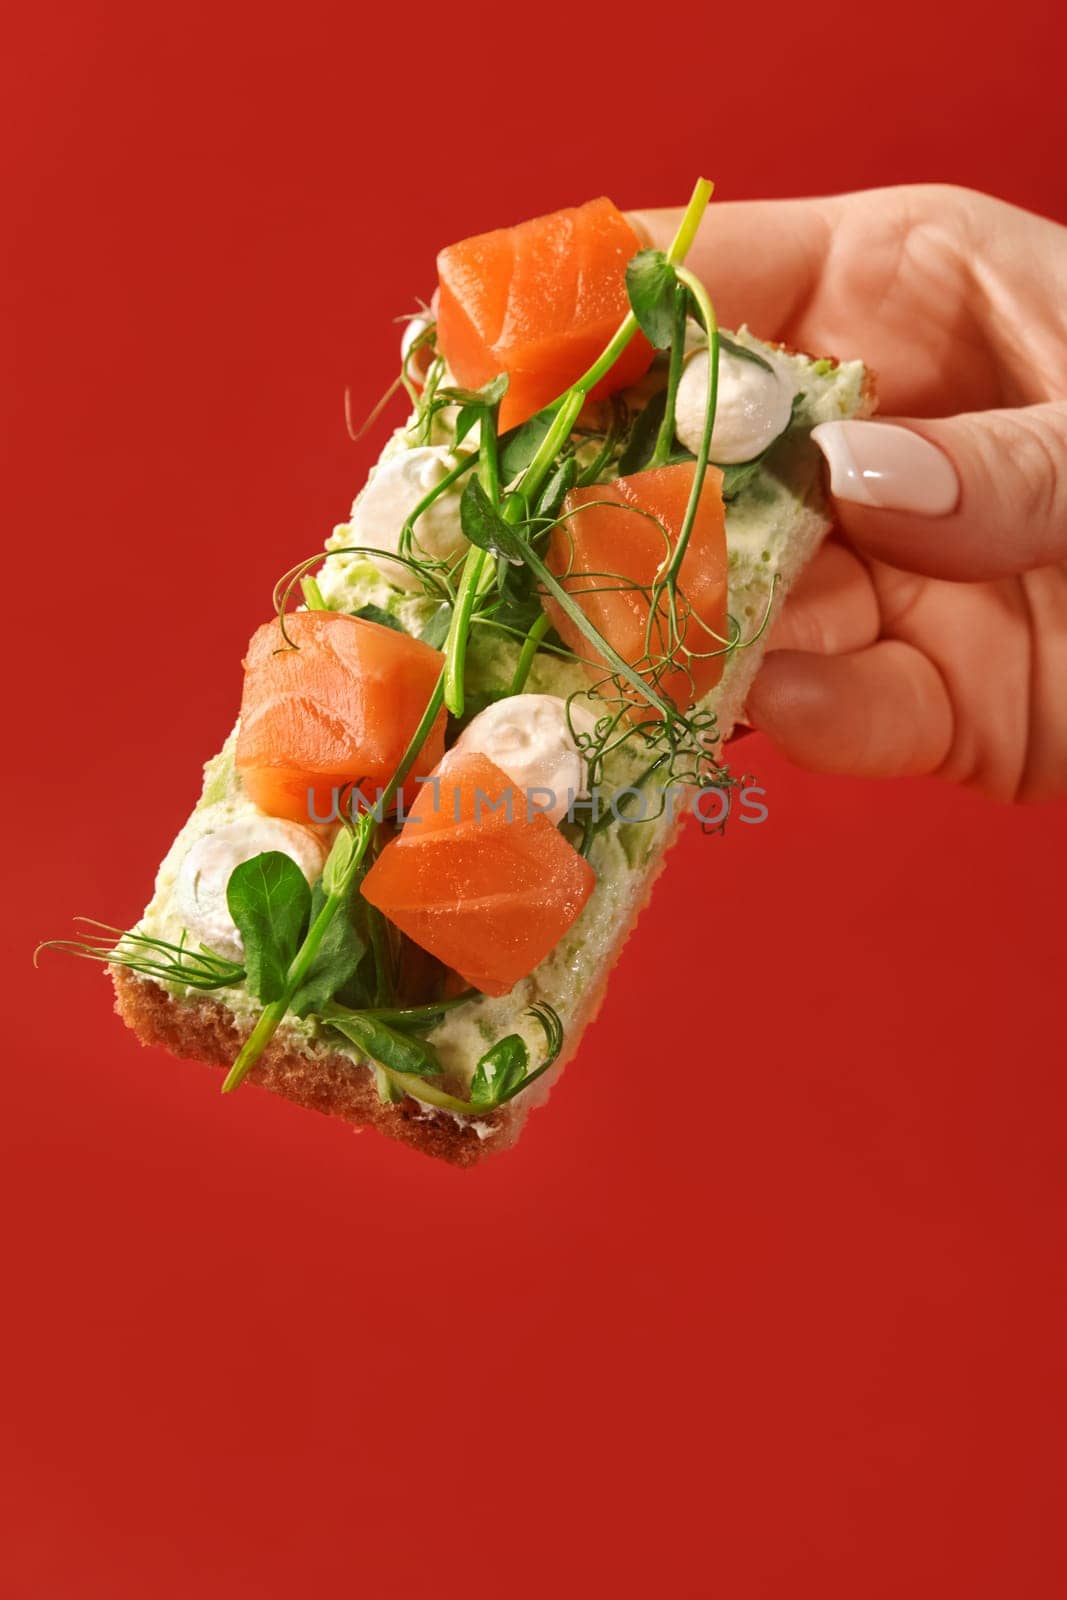 Female hand holding bruschetta with cured salmon, mozzarella and greens by nazarovsergey